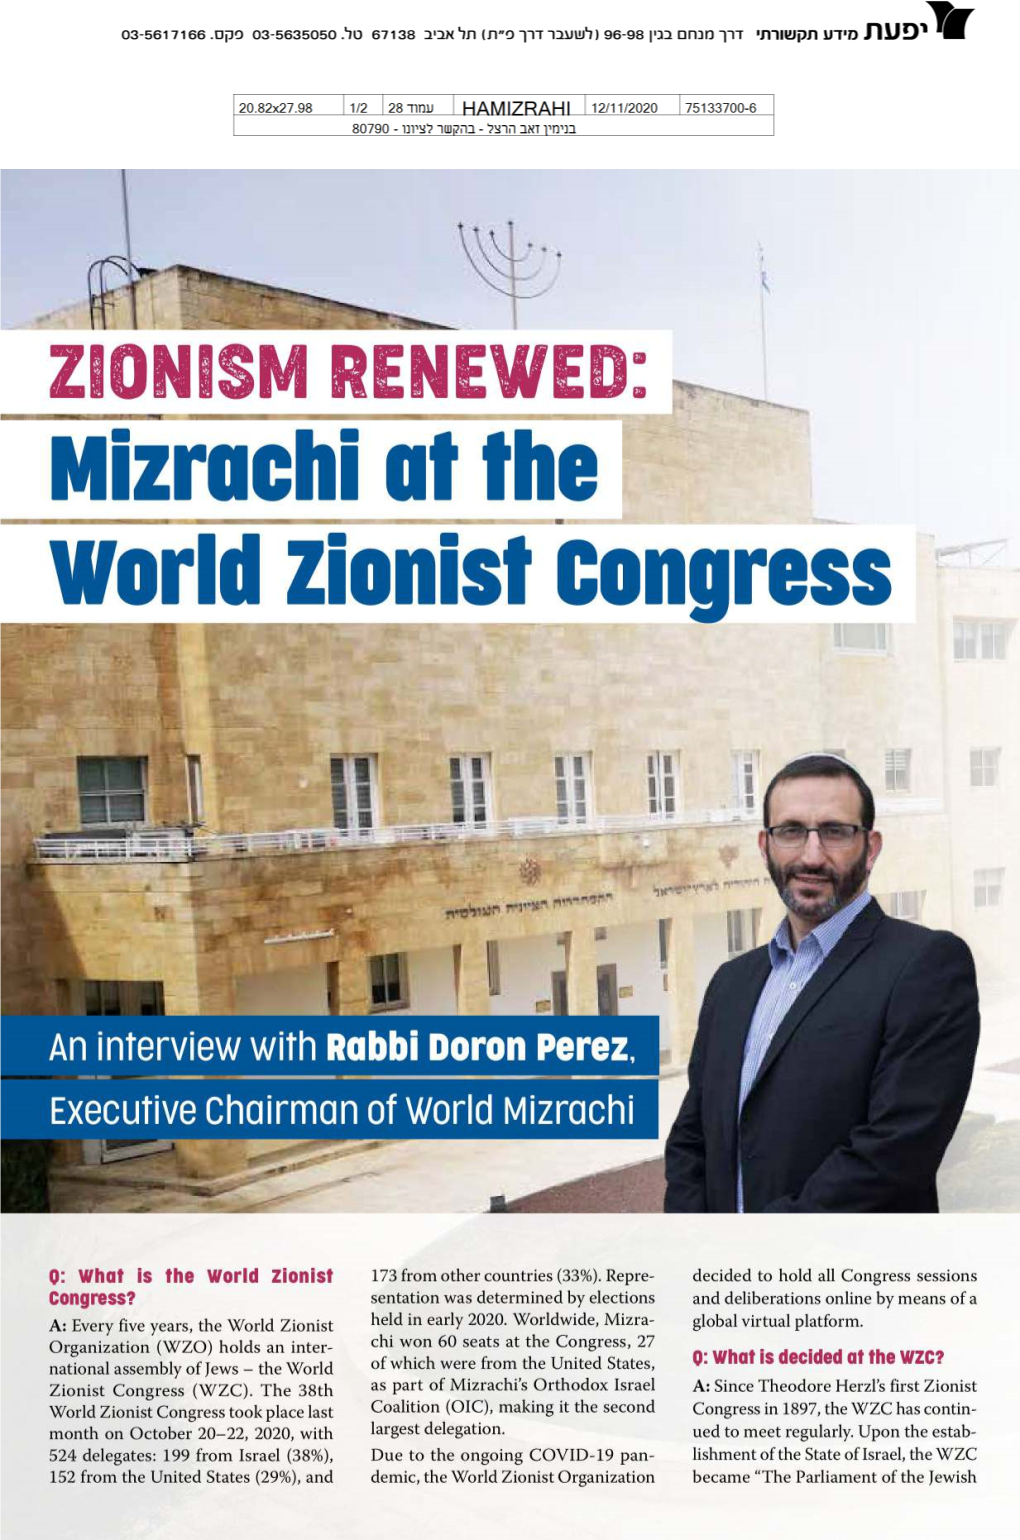 Mizrachi at the World Zionist Congress